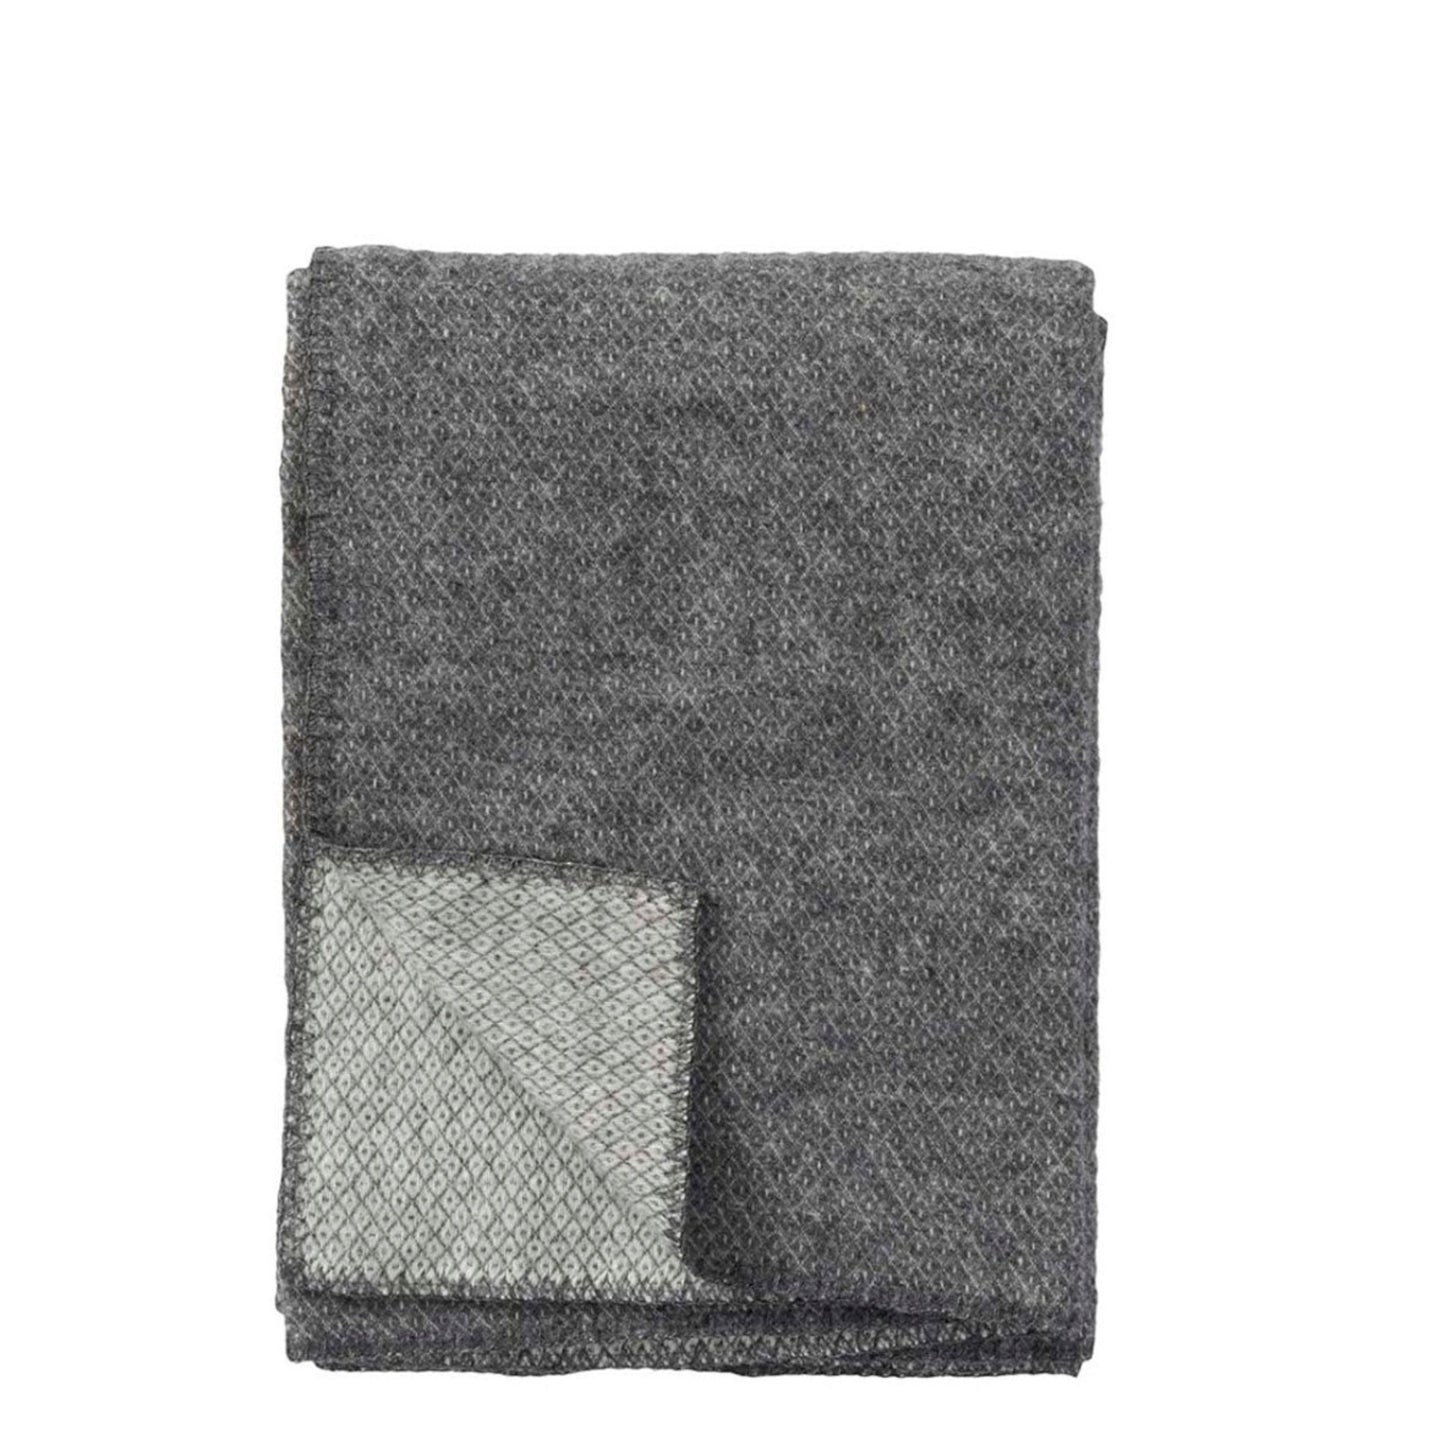 KLIPPAN PREMIUM Peak Merino Wool Blanket, 130x180cm (4342721806401)